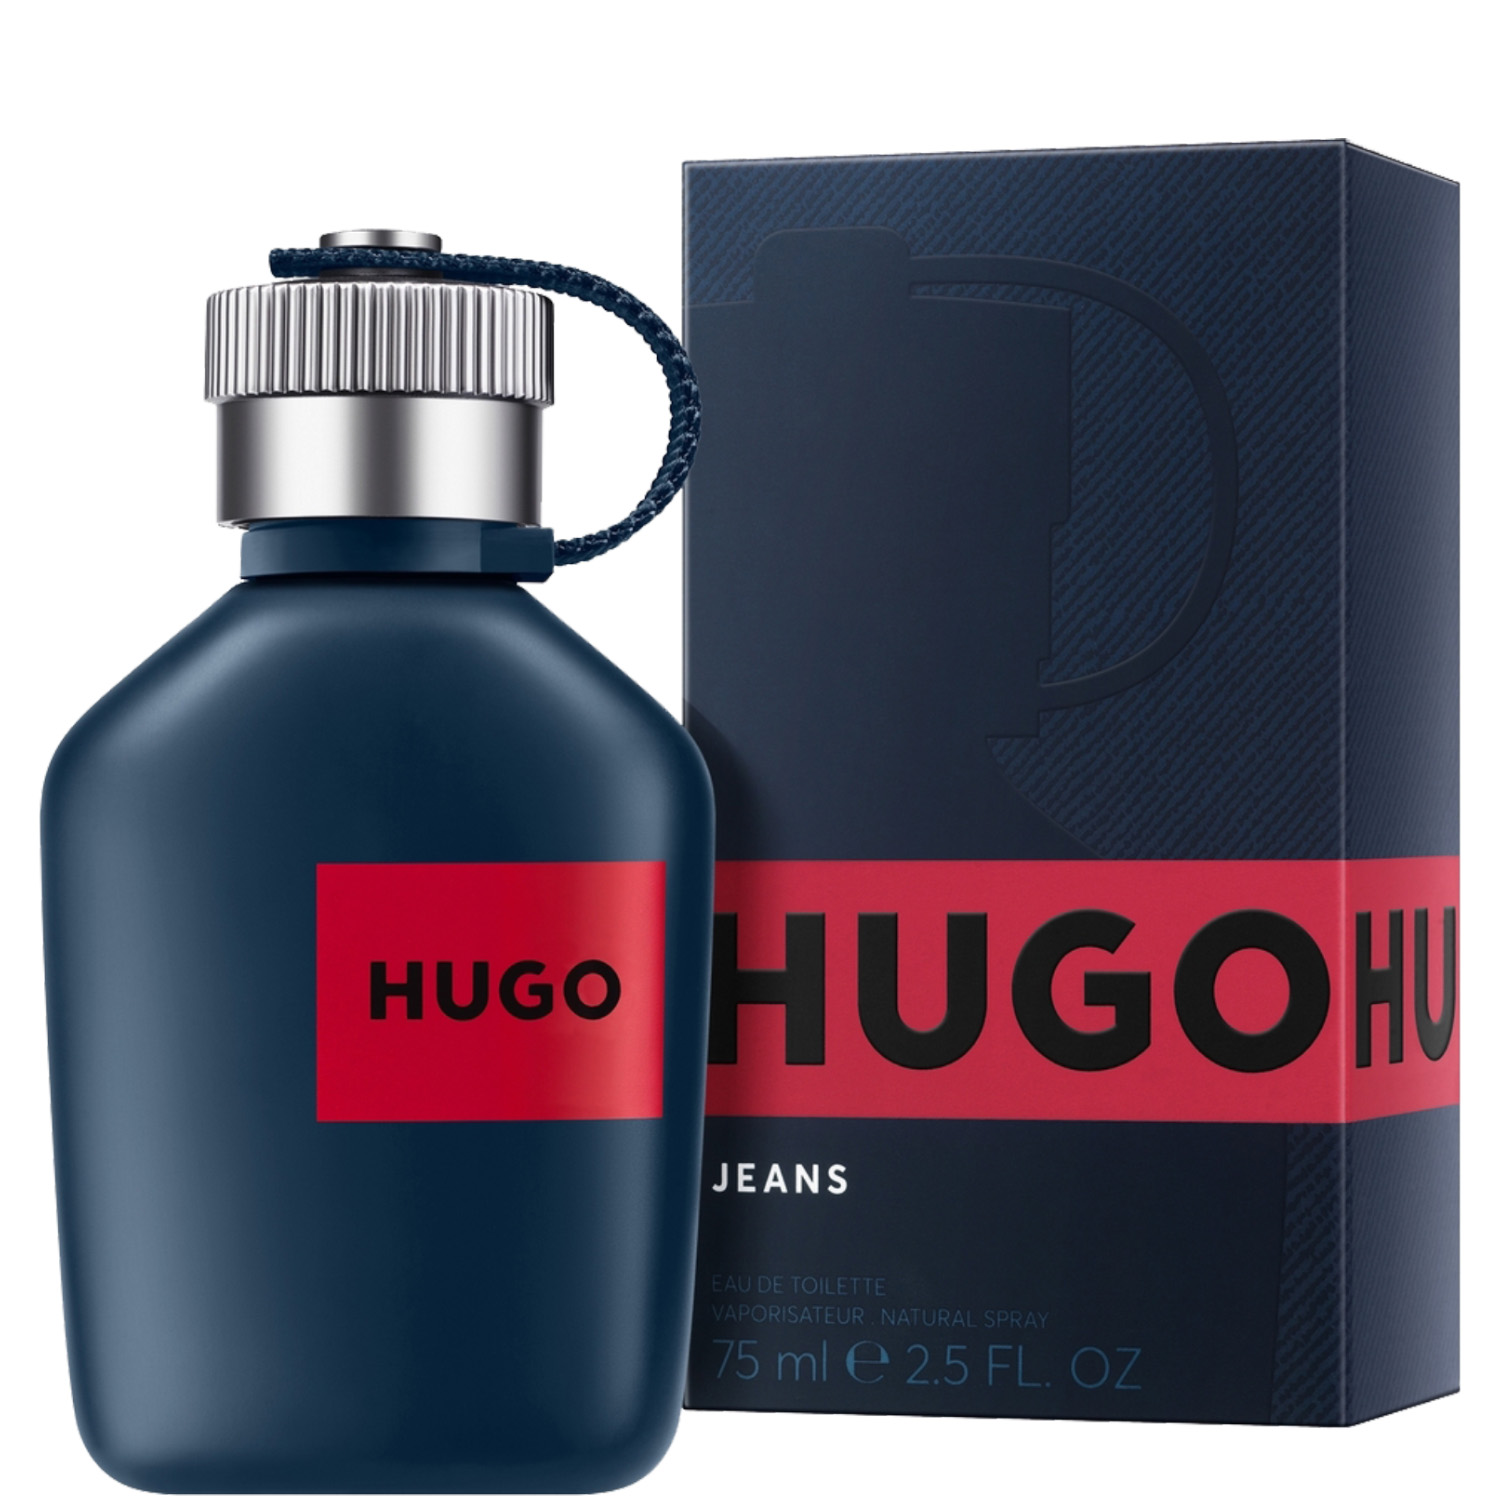 Hugo Boss Hugo Jeans Eau de Toilette 75ml